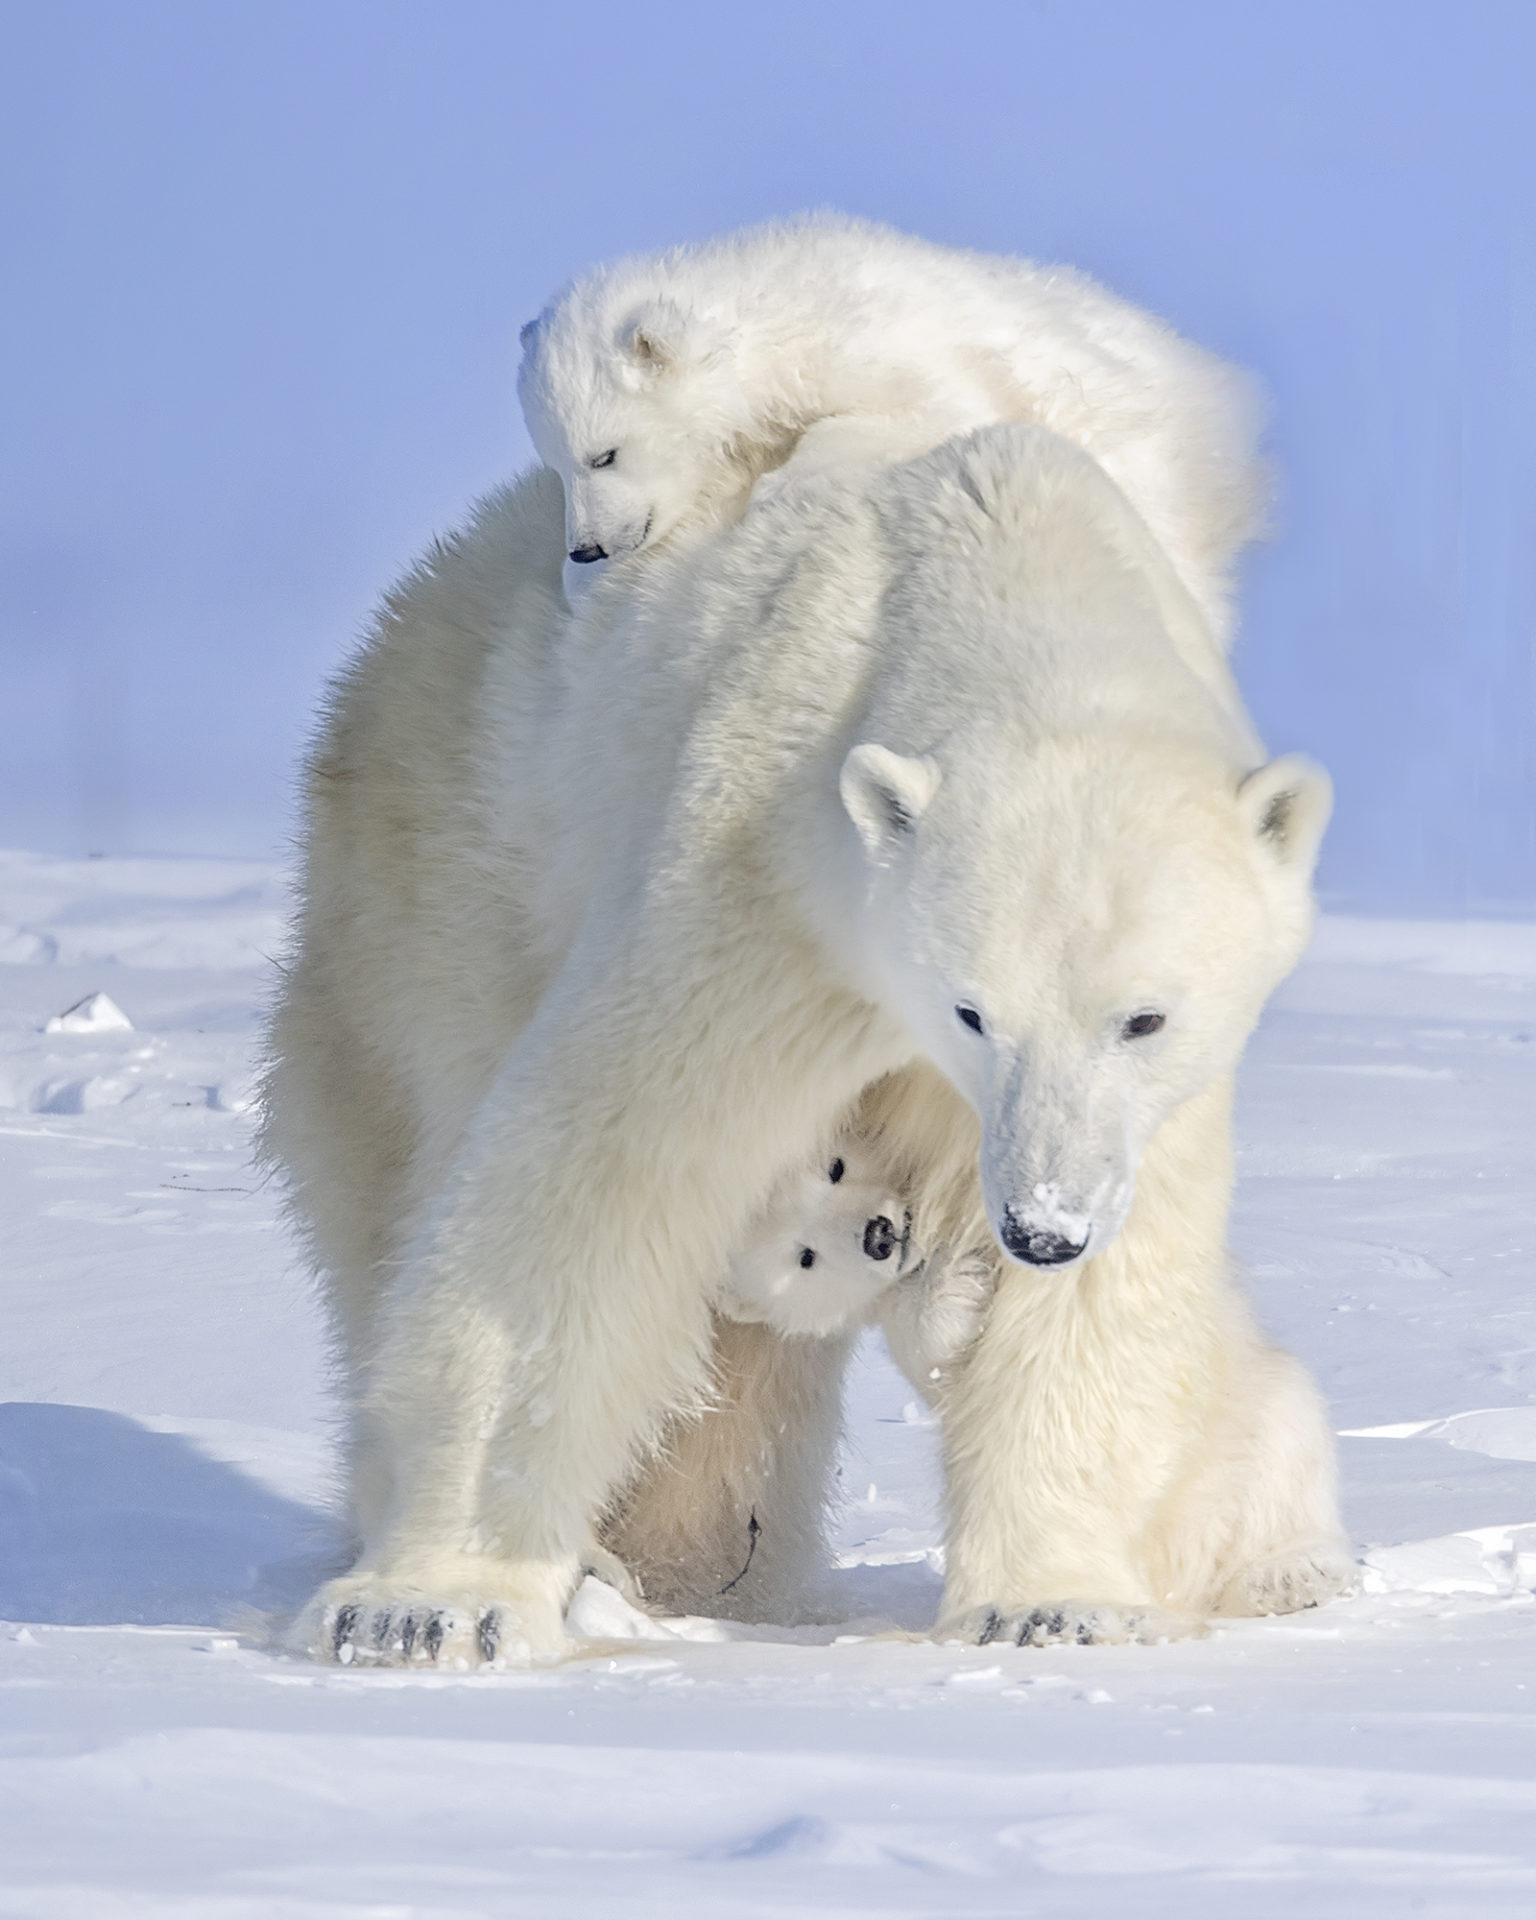 how tall is a polar bear standing up